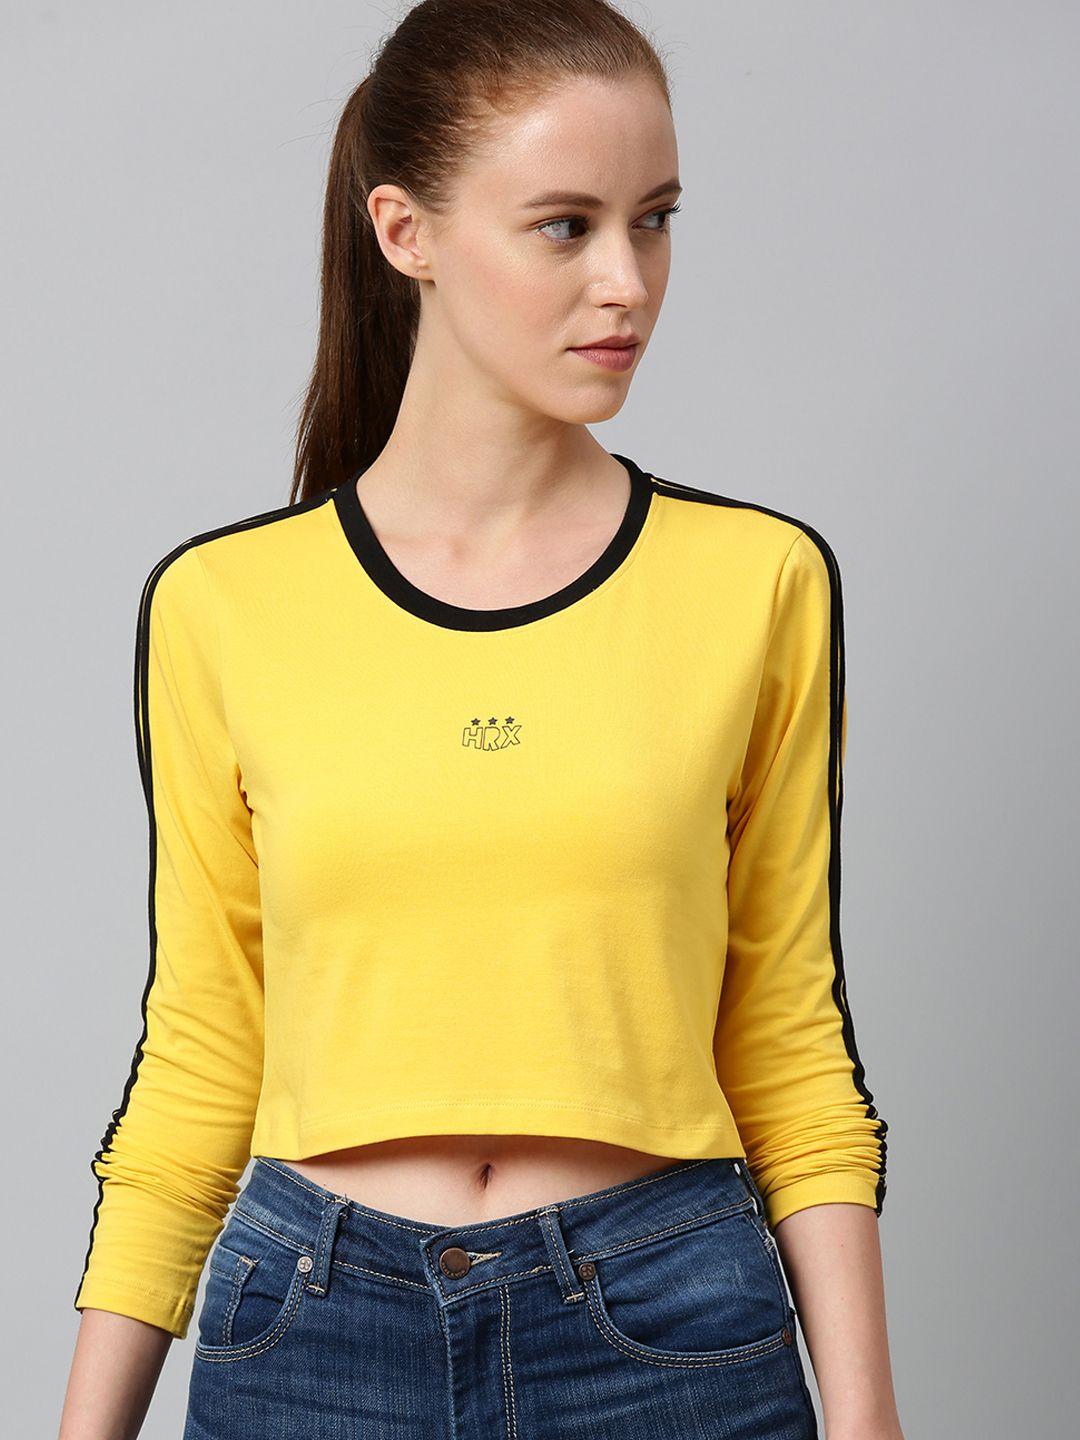 hrx by hrithik roshan women mustard yellow solid tie & dye slim fit lycra lifestyle tshirts